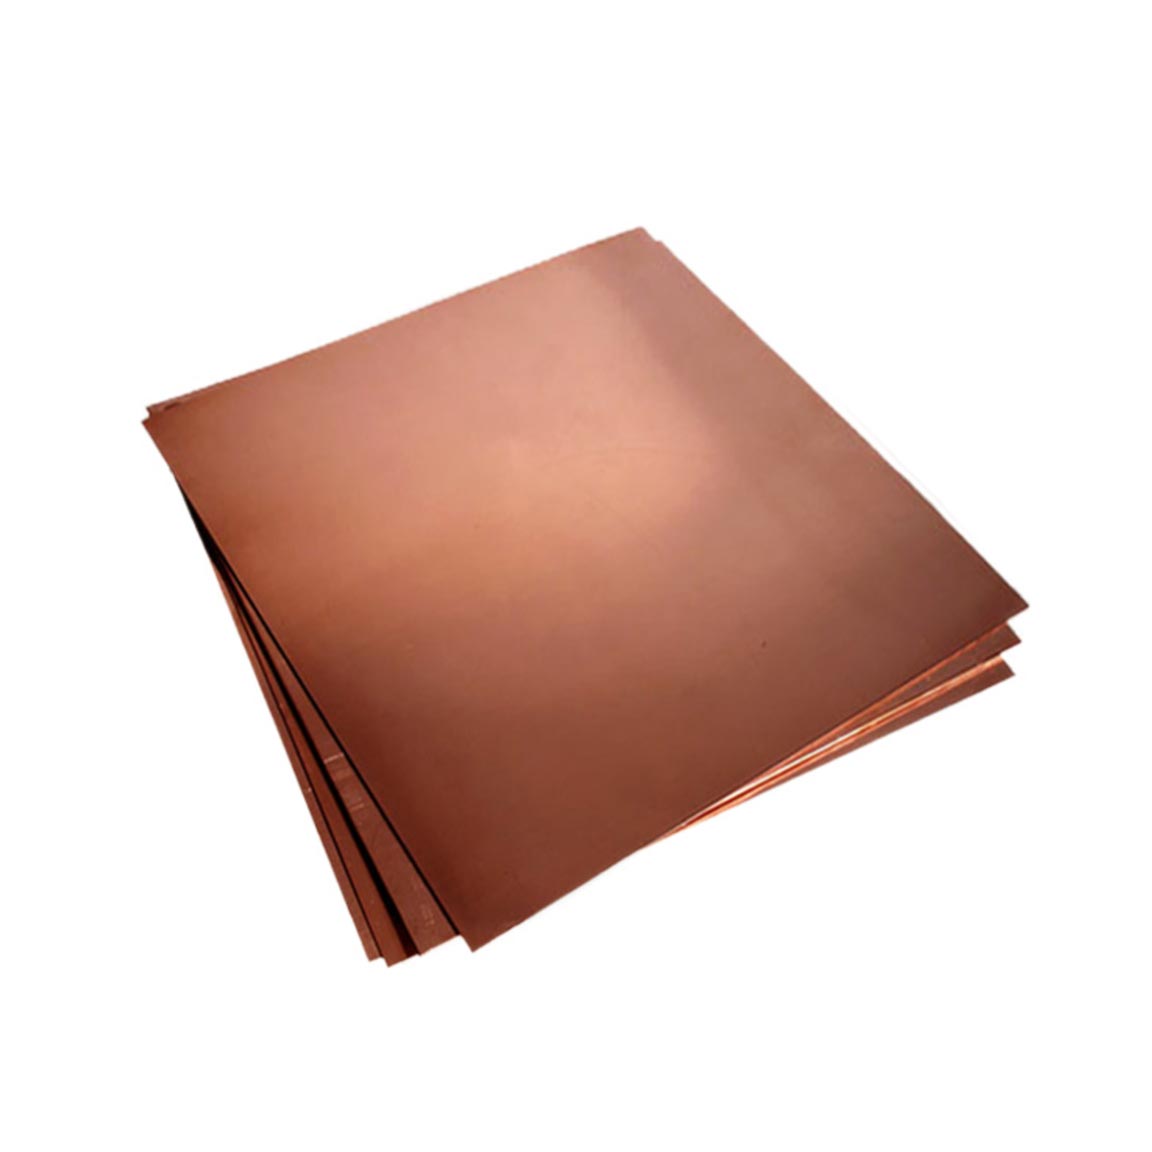 copper-sheet1-metals-and-gems-jewelry-studio